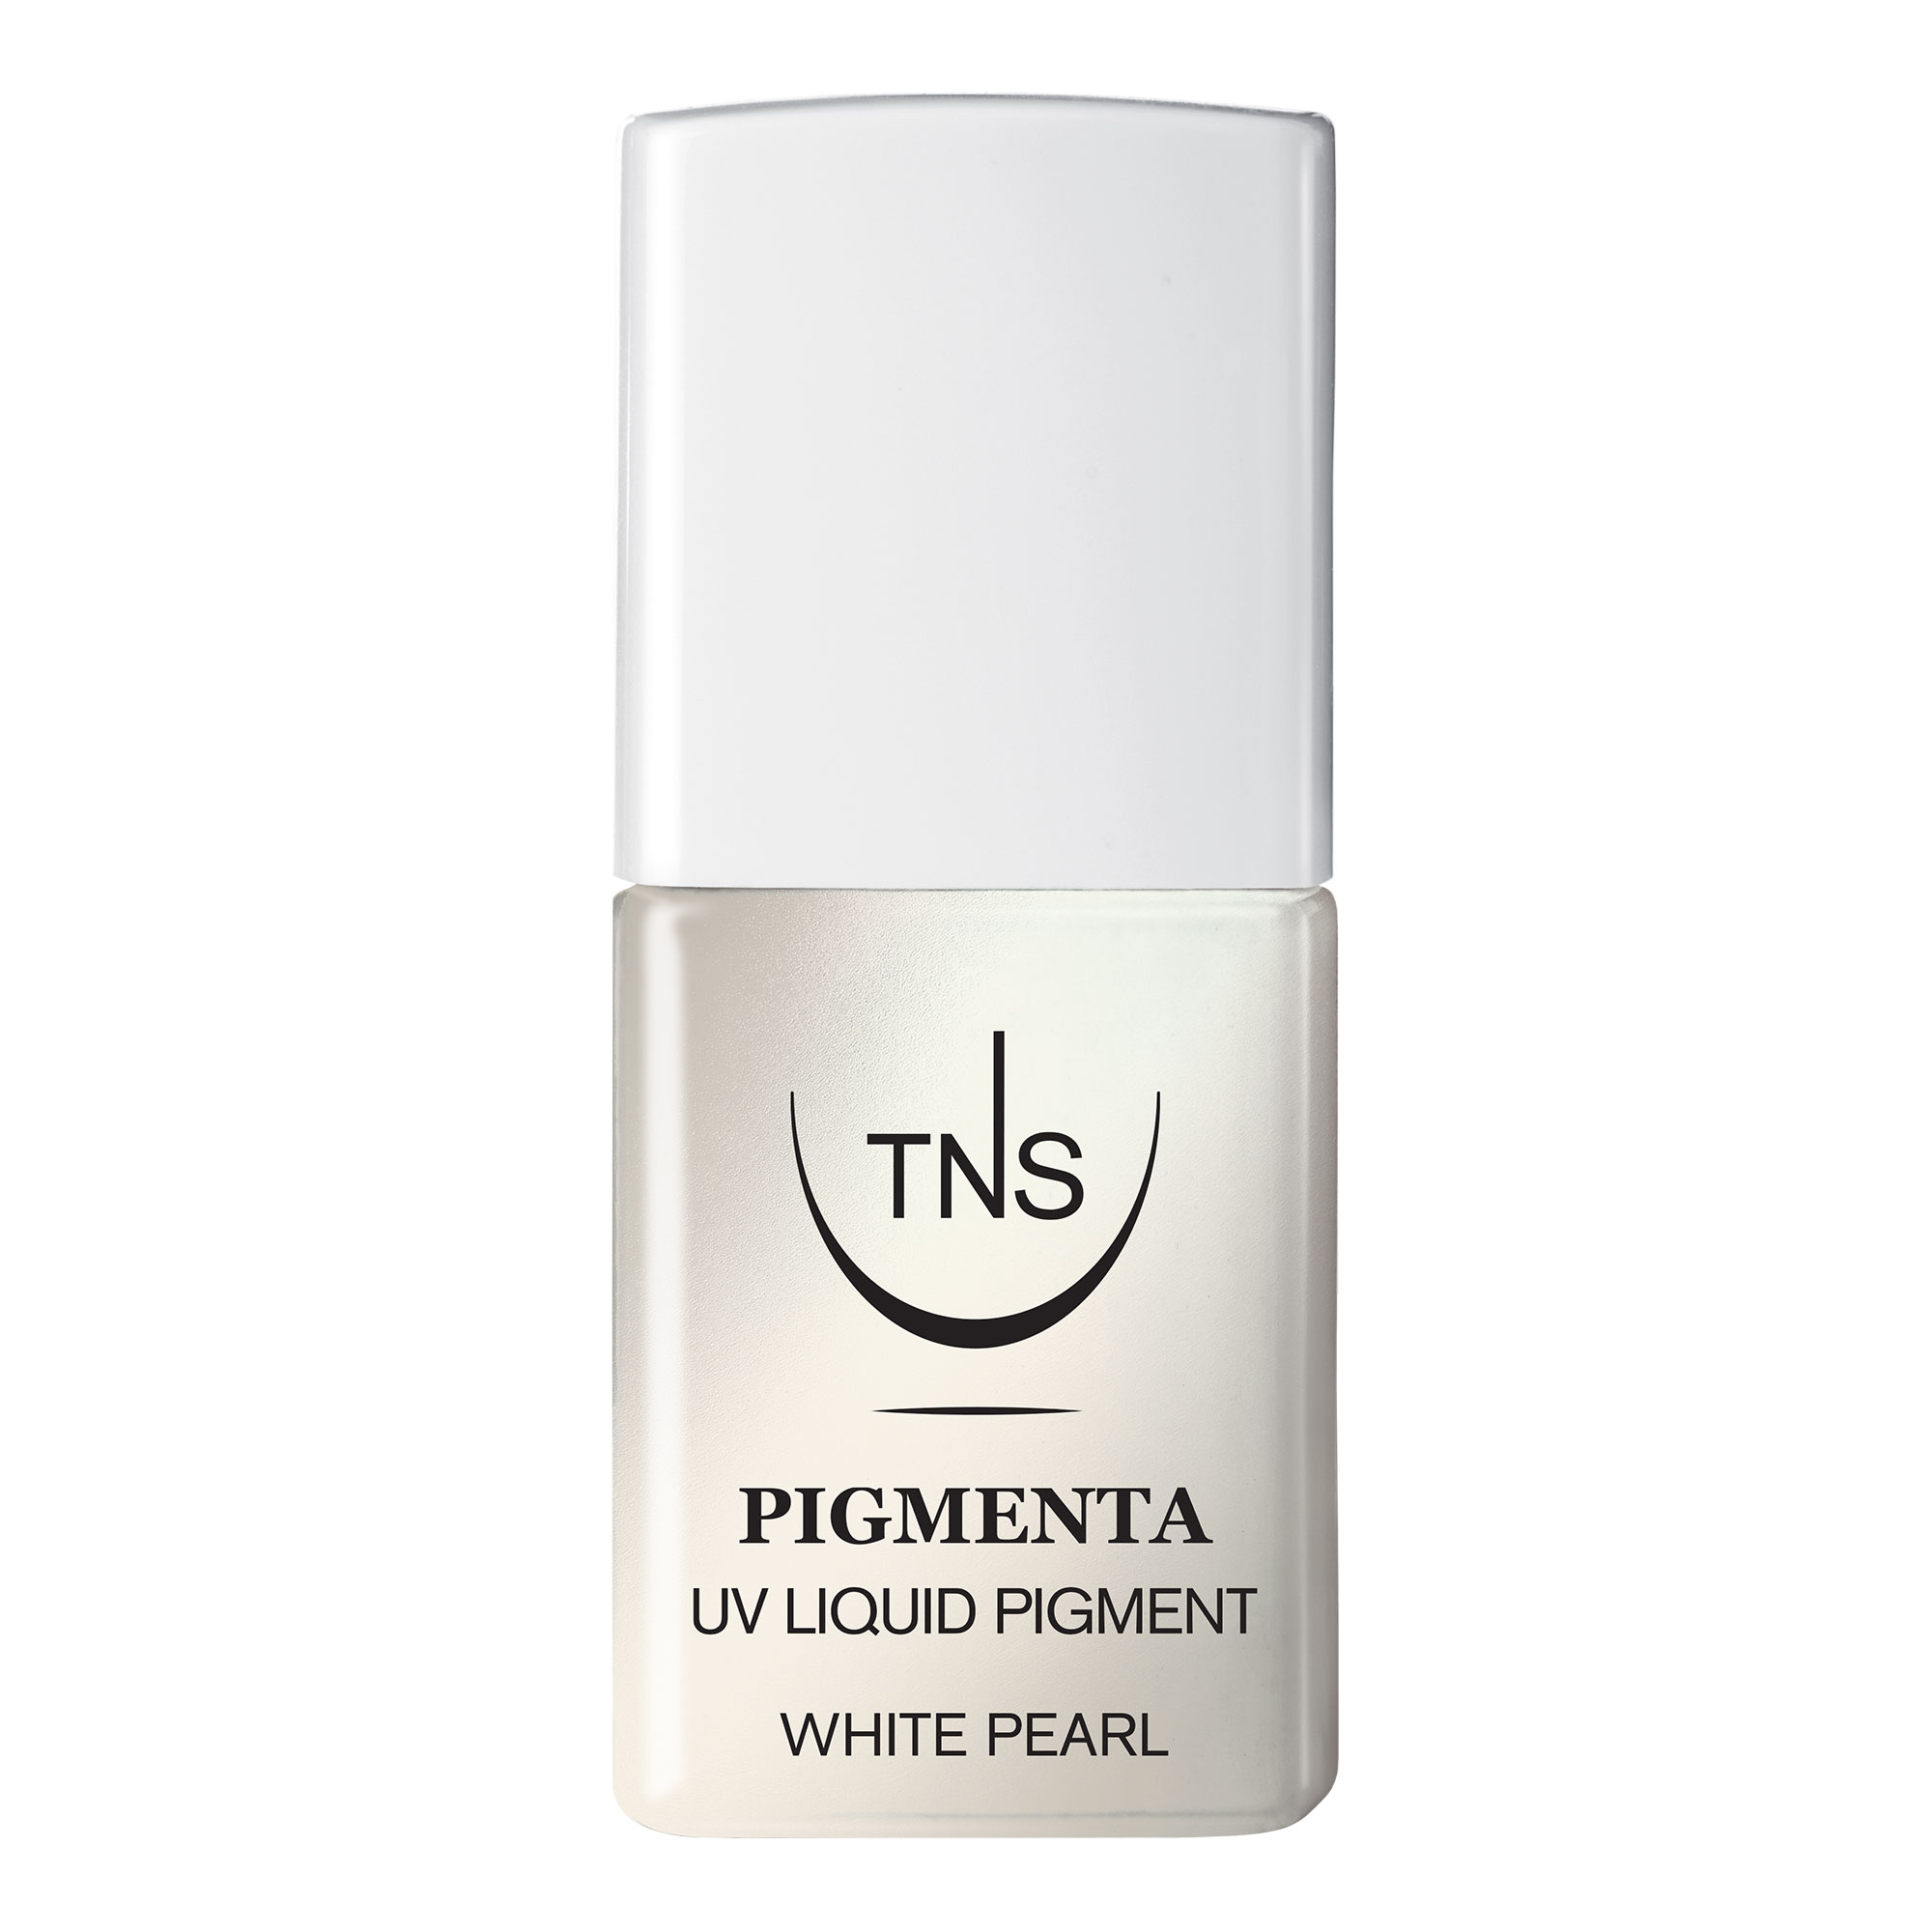 Pigmento Liquido UV White Pearl bianco perla 10 ml Pigmenta TNS